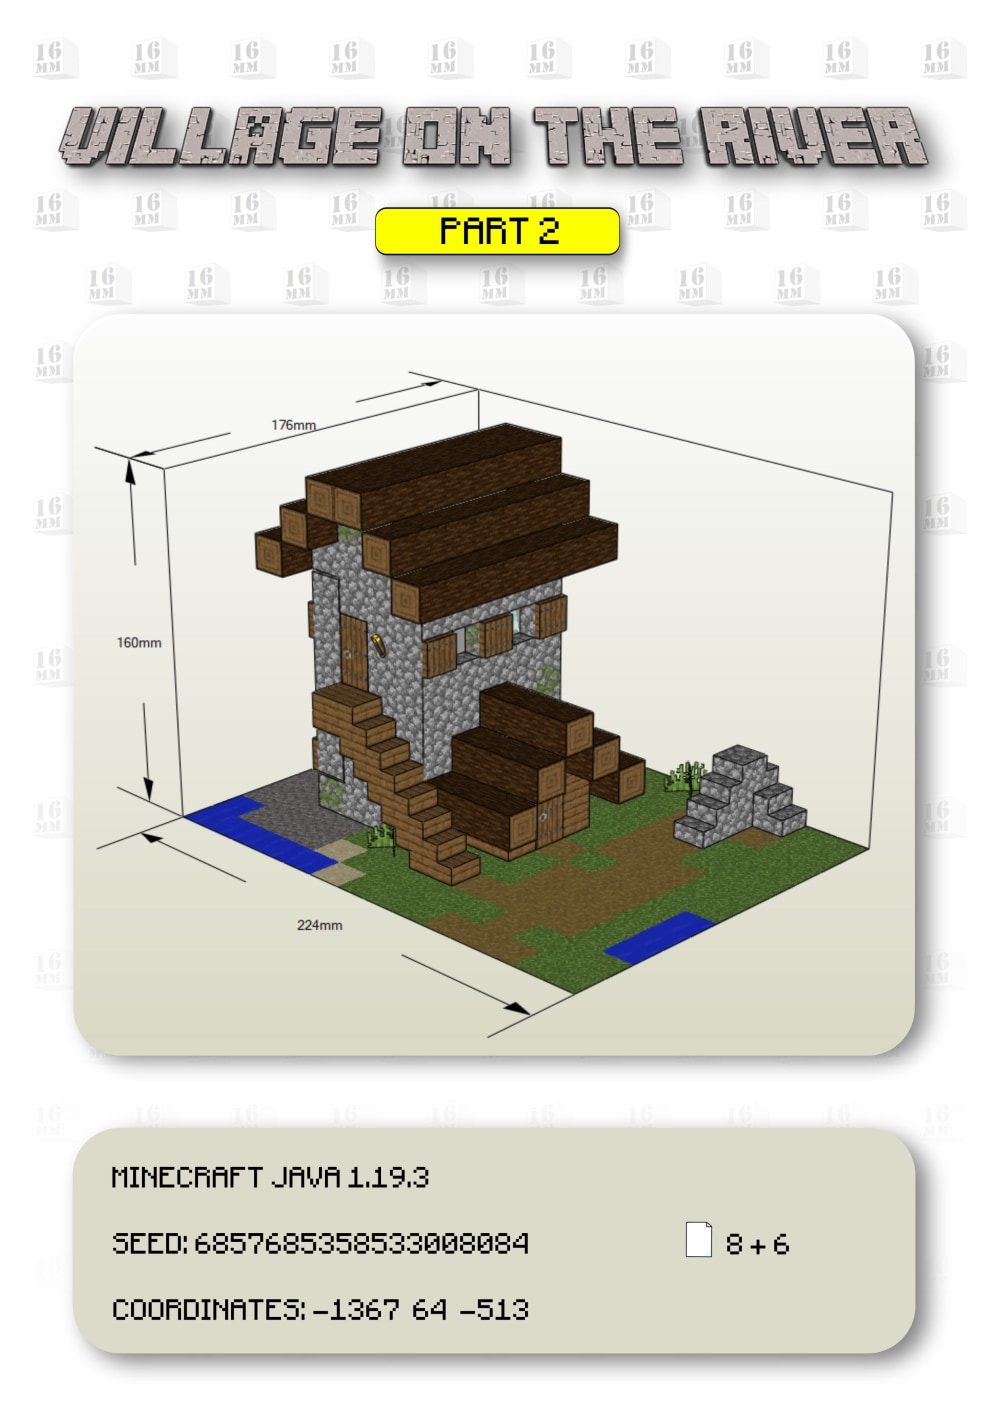 Free Papercraft BONSAI Minecraft Style Digital (Instant Download) 